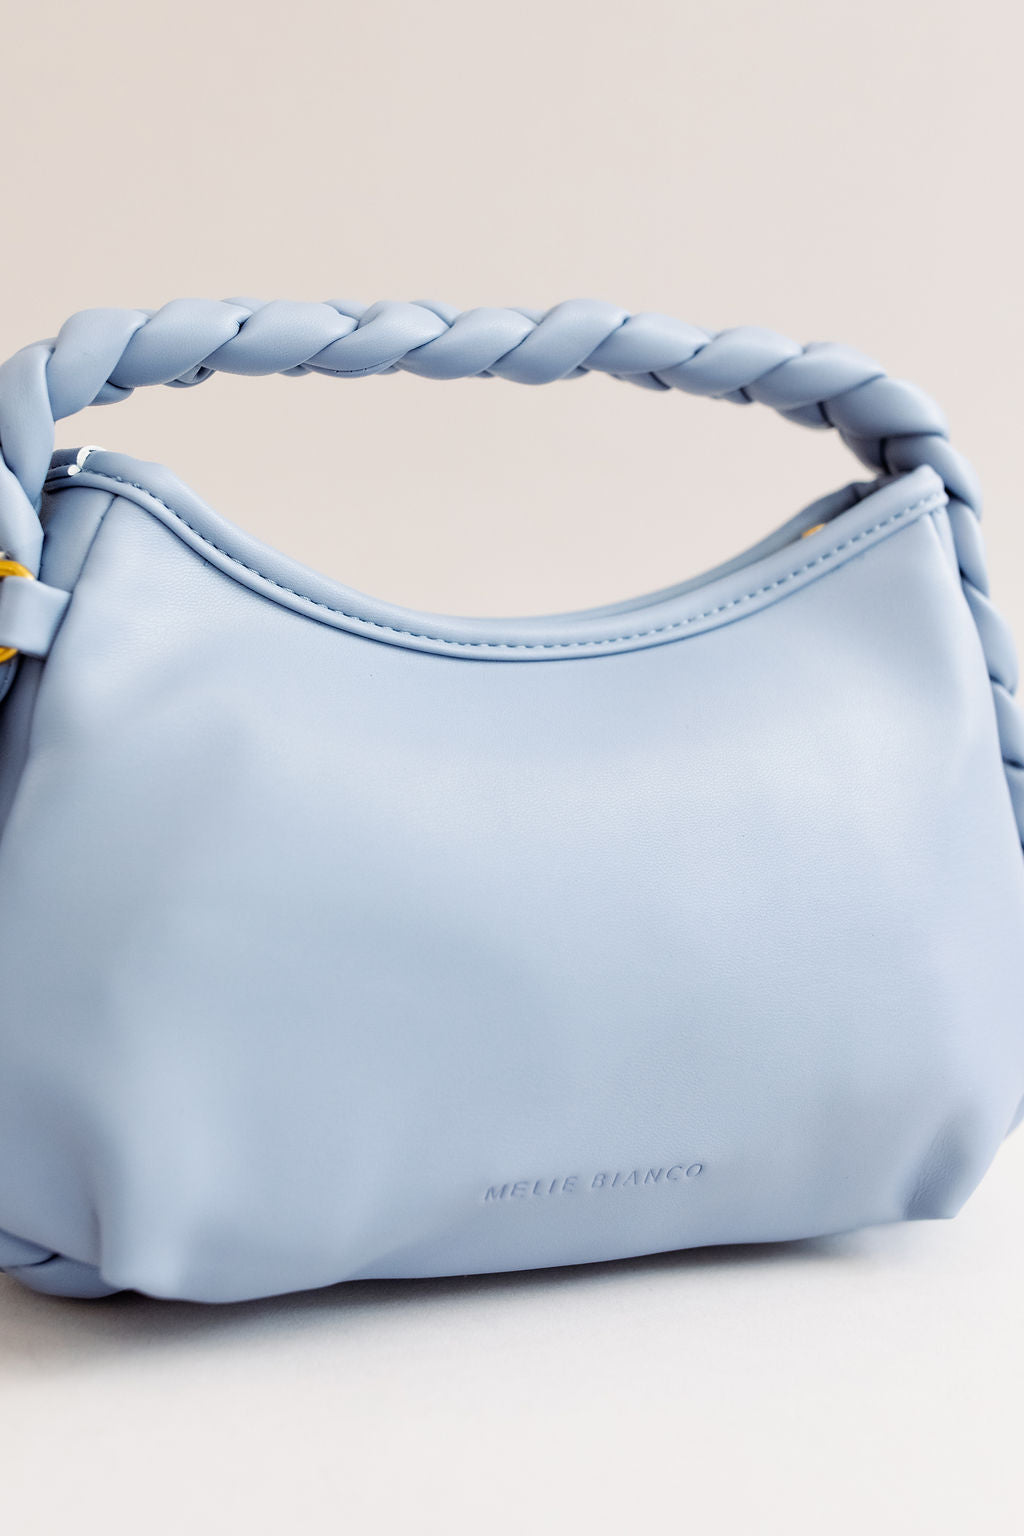 Melie Bianco | Eliana Recycled Vegan Leather Shoulder Bag | Blue - Poppy and Stella